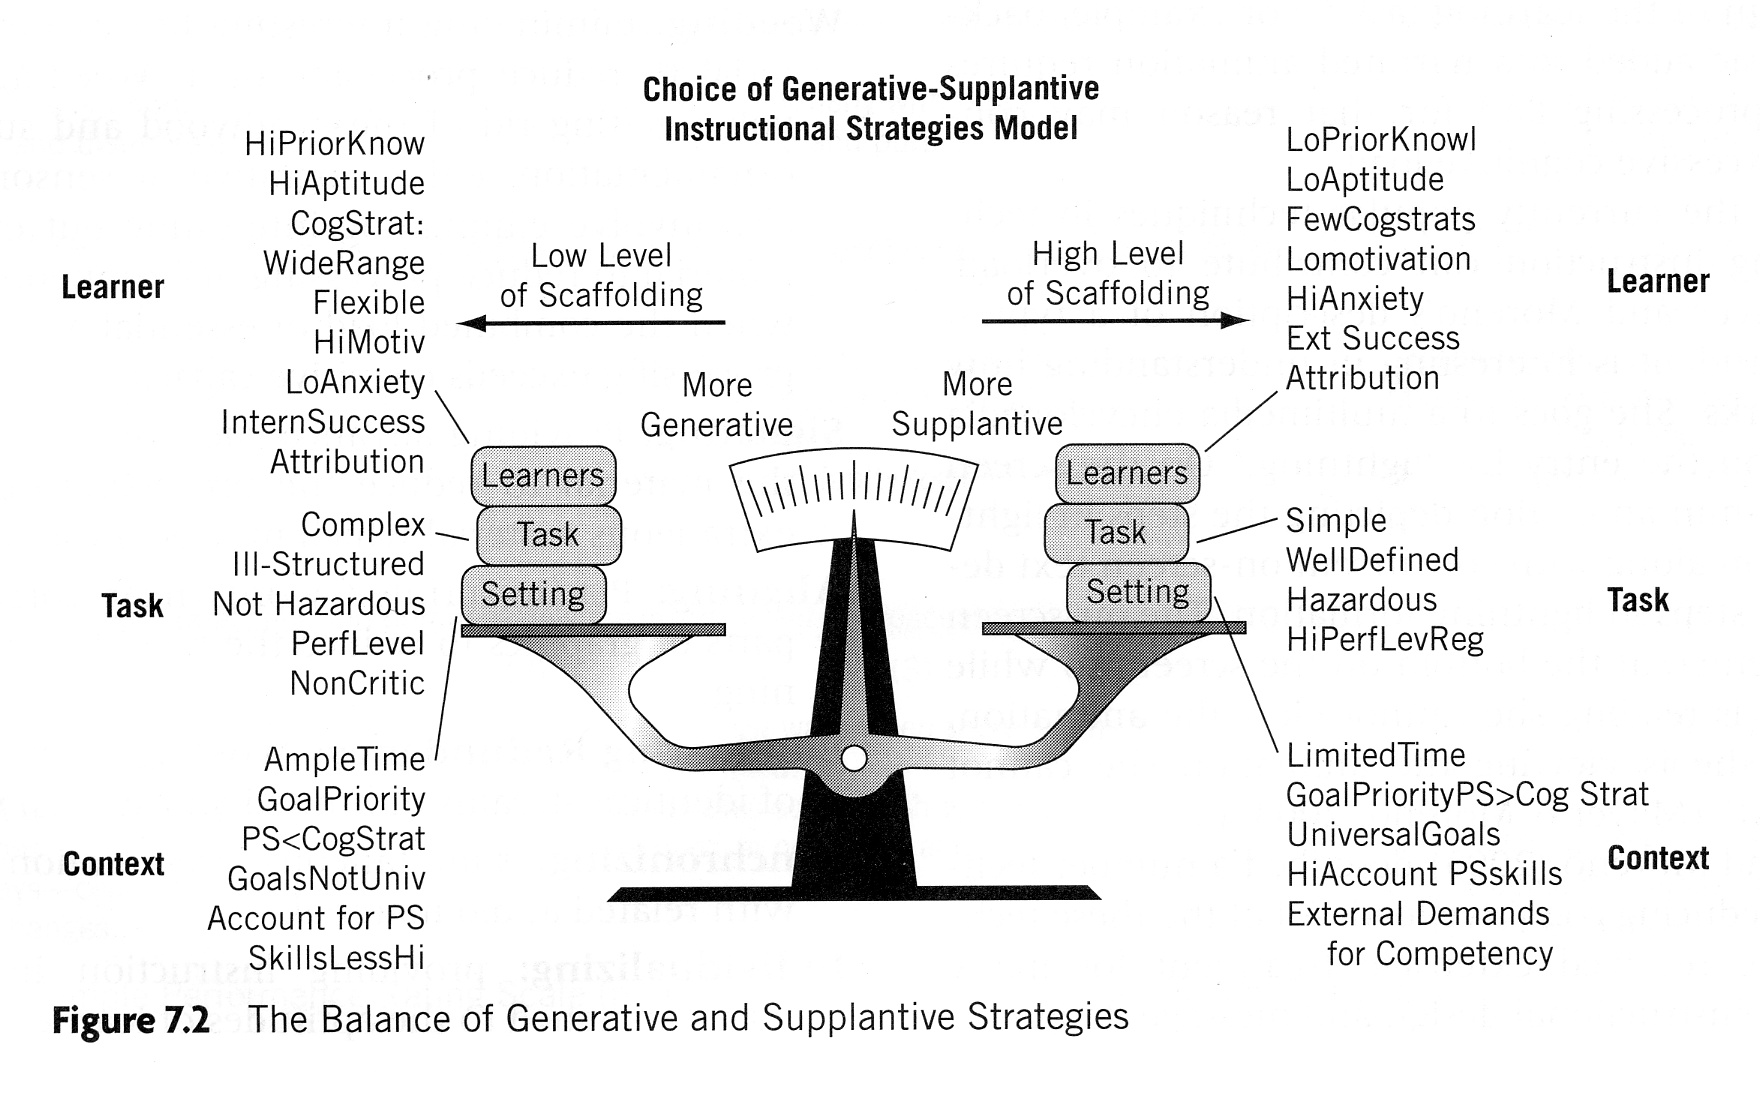 Choice of generative-supplantive instructional strategies model.